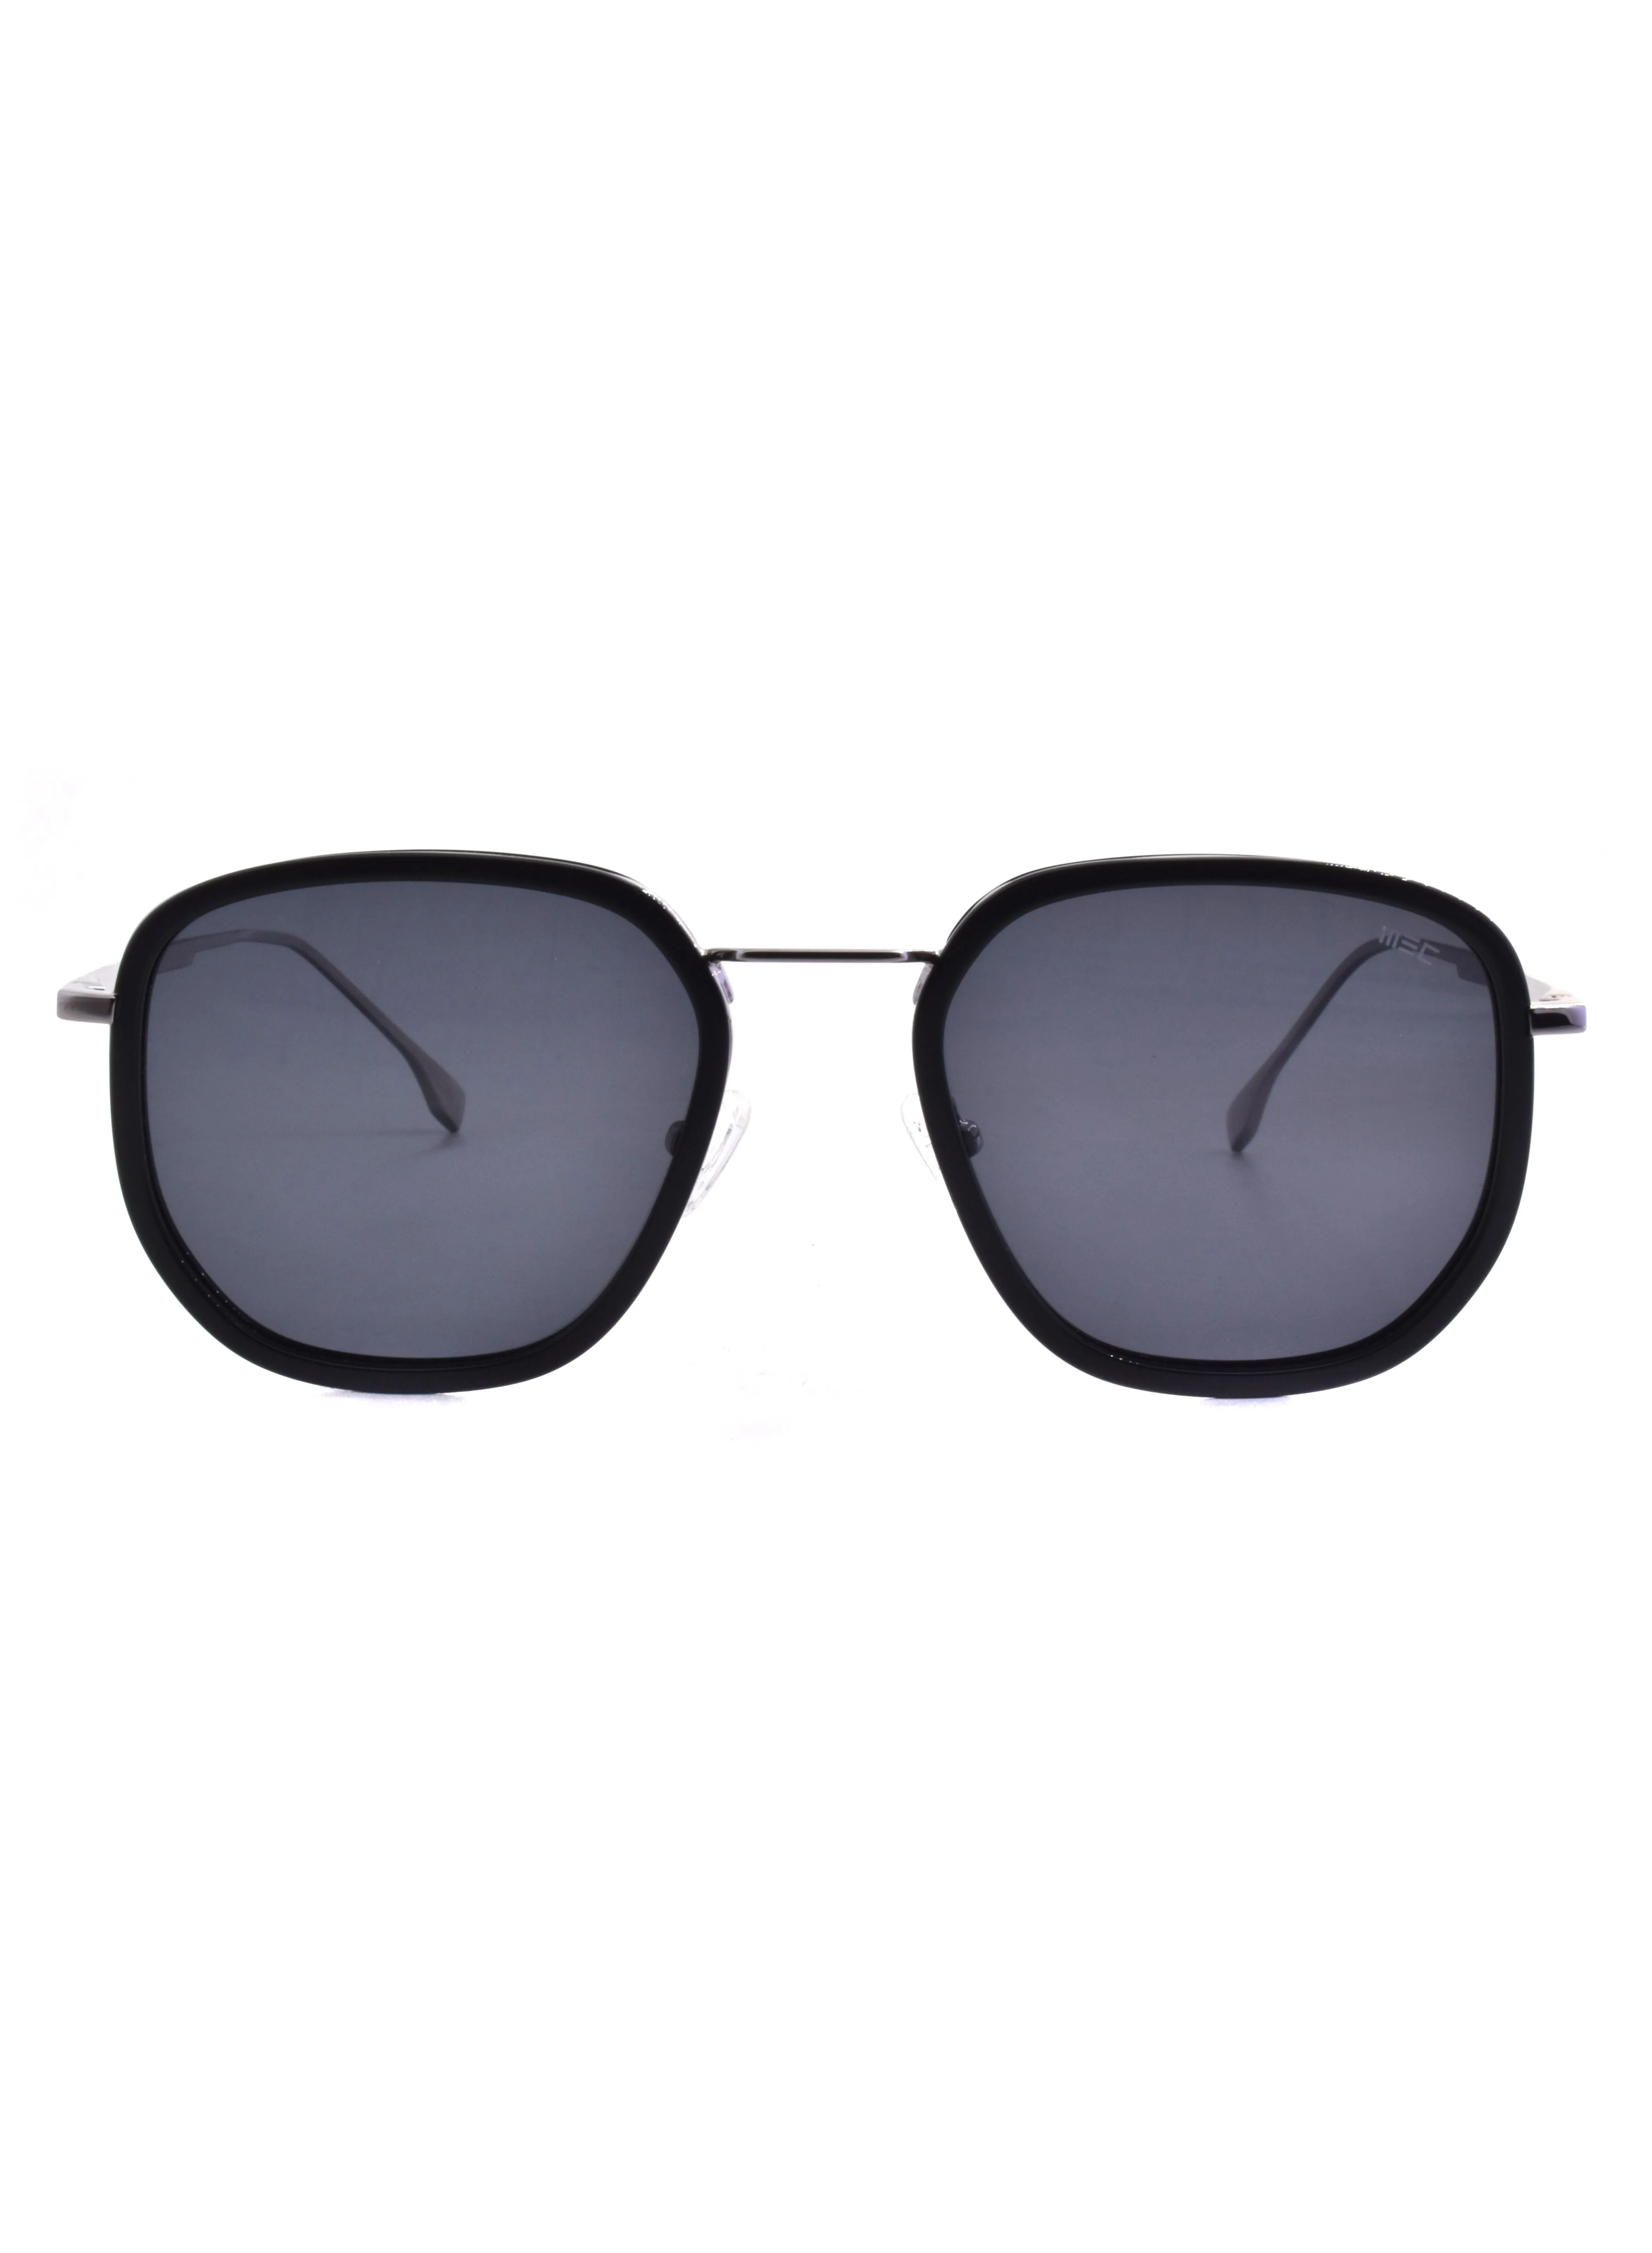 MEC Square Shape Sunglasses GLT9031-C3